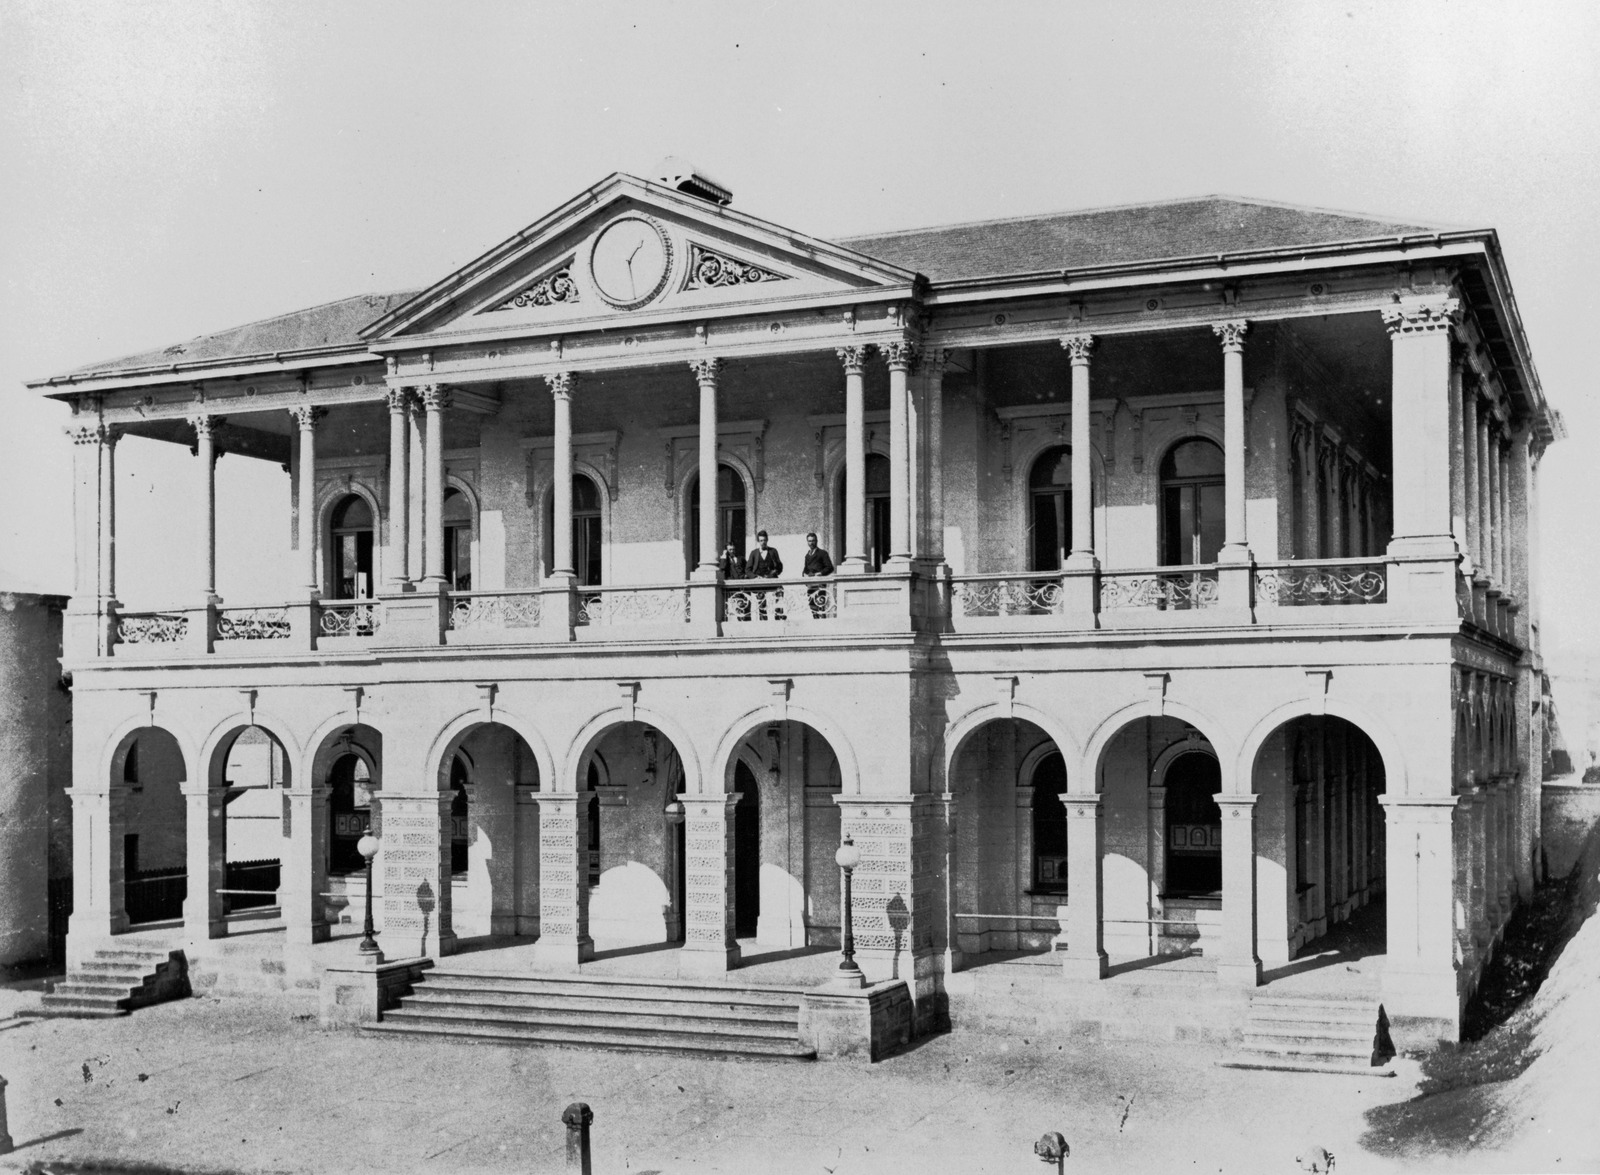 Brisbane's General Post Office, ca. 1875